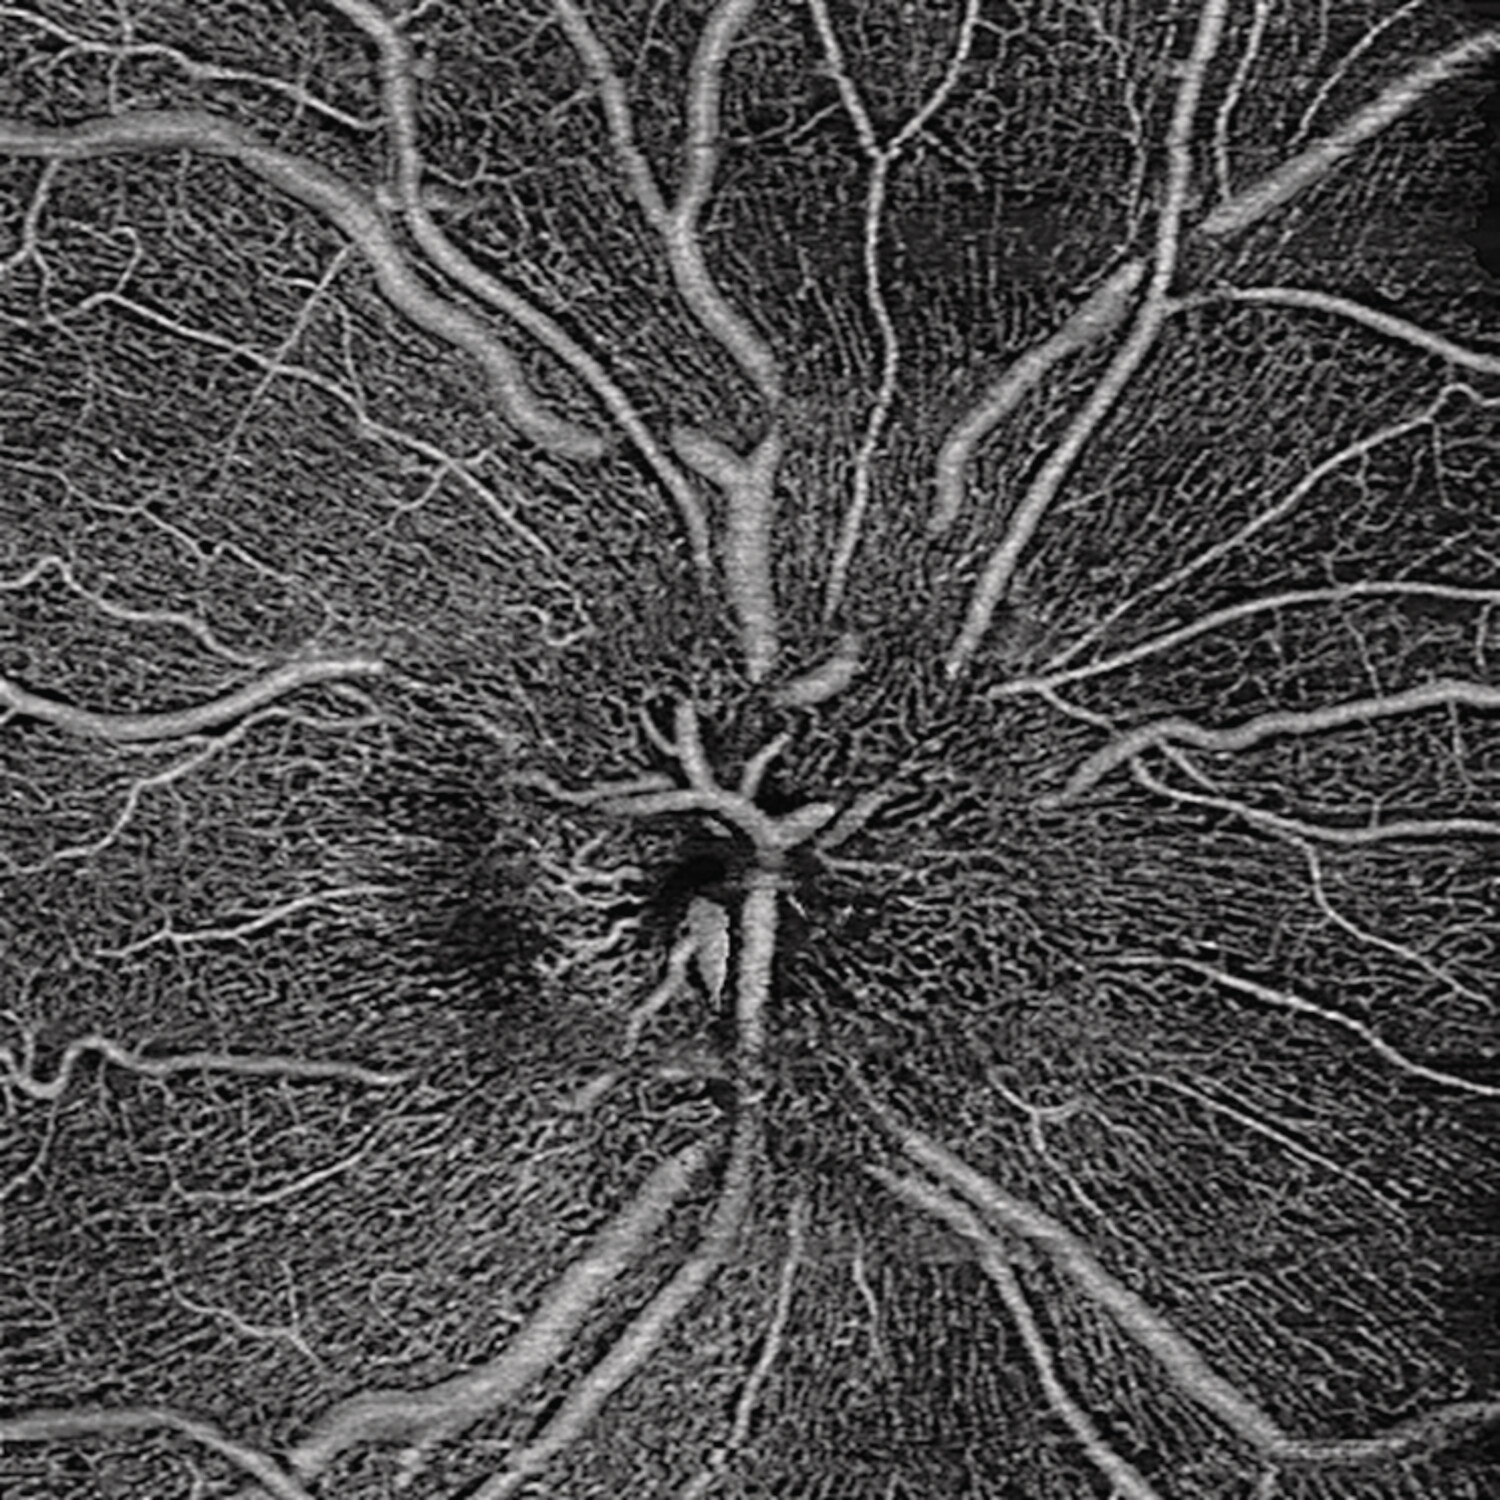 OCT-angiographie en neuro-ophtalmologie - Figure 3